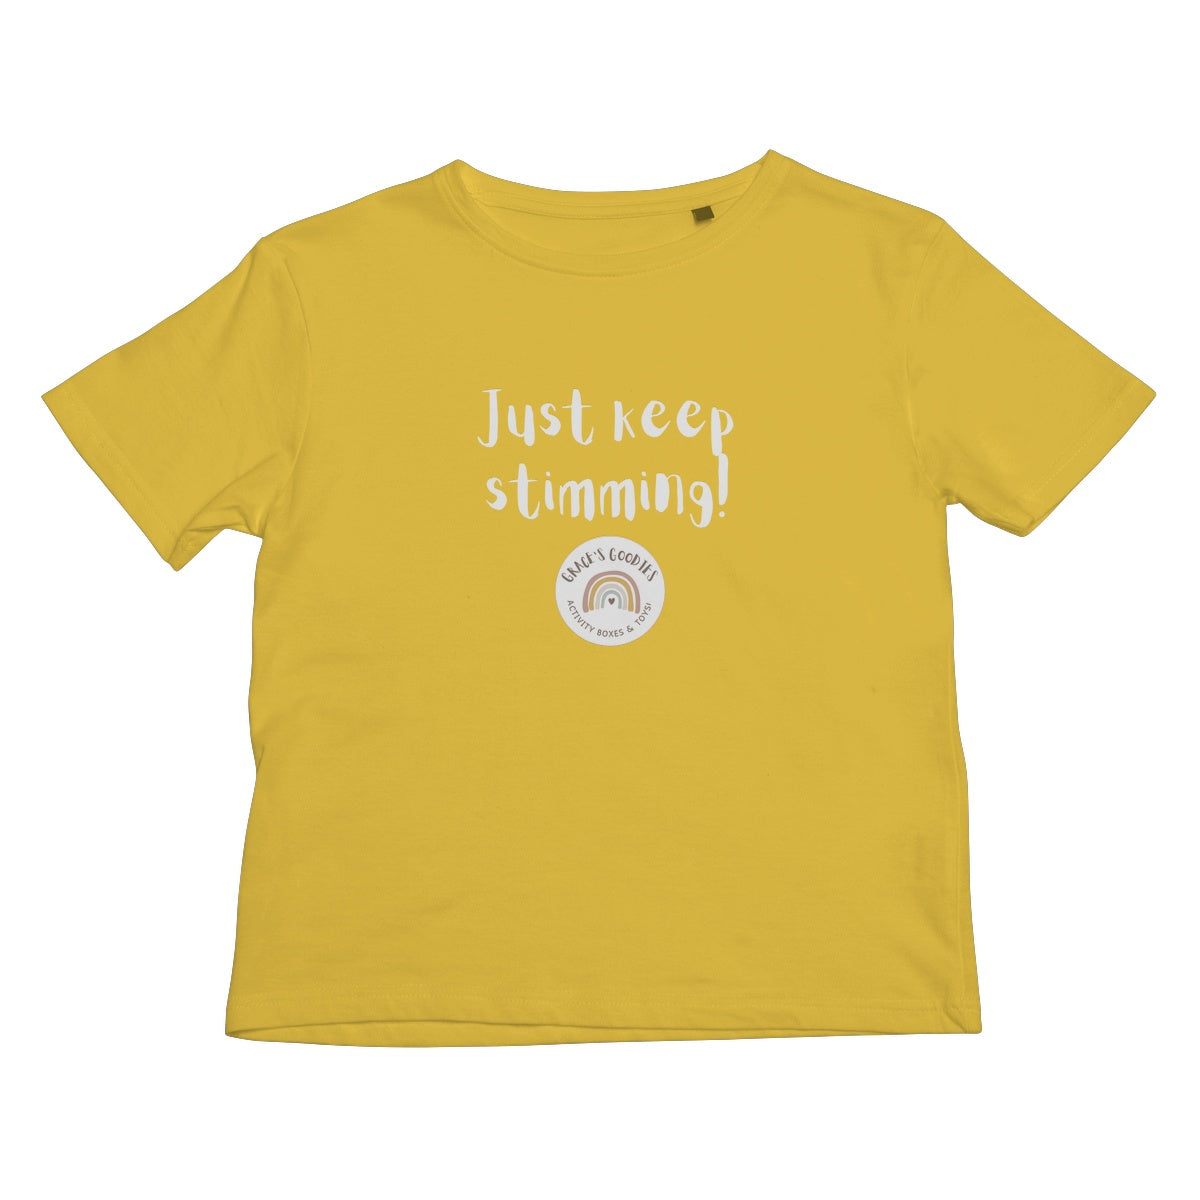 Just keep stimming Kids T-Shirt